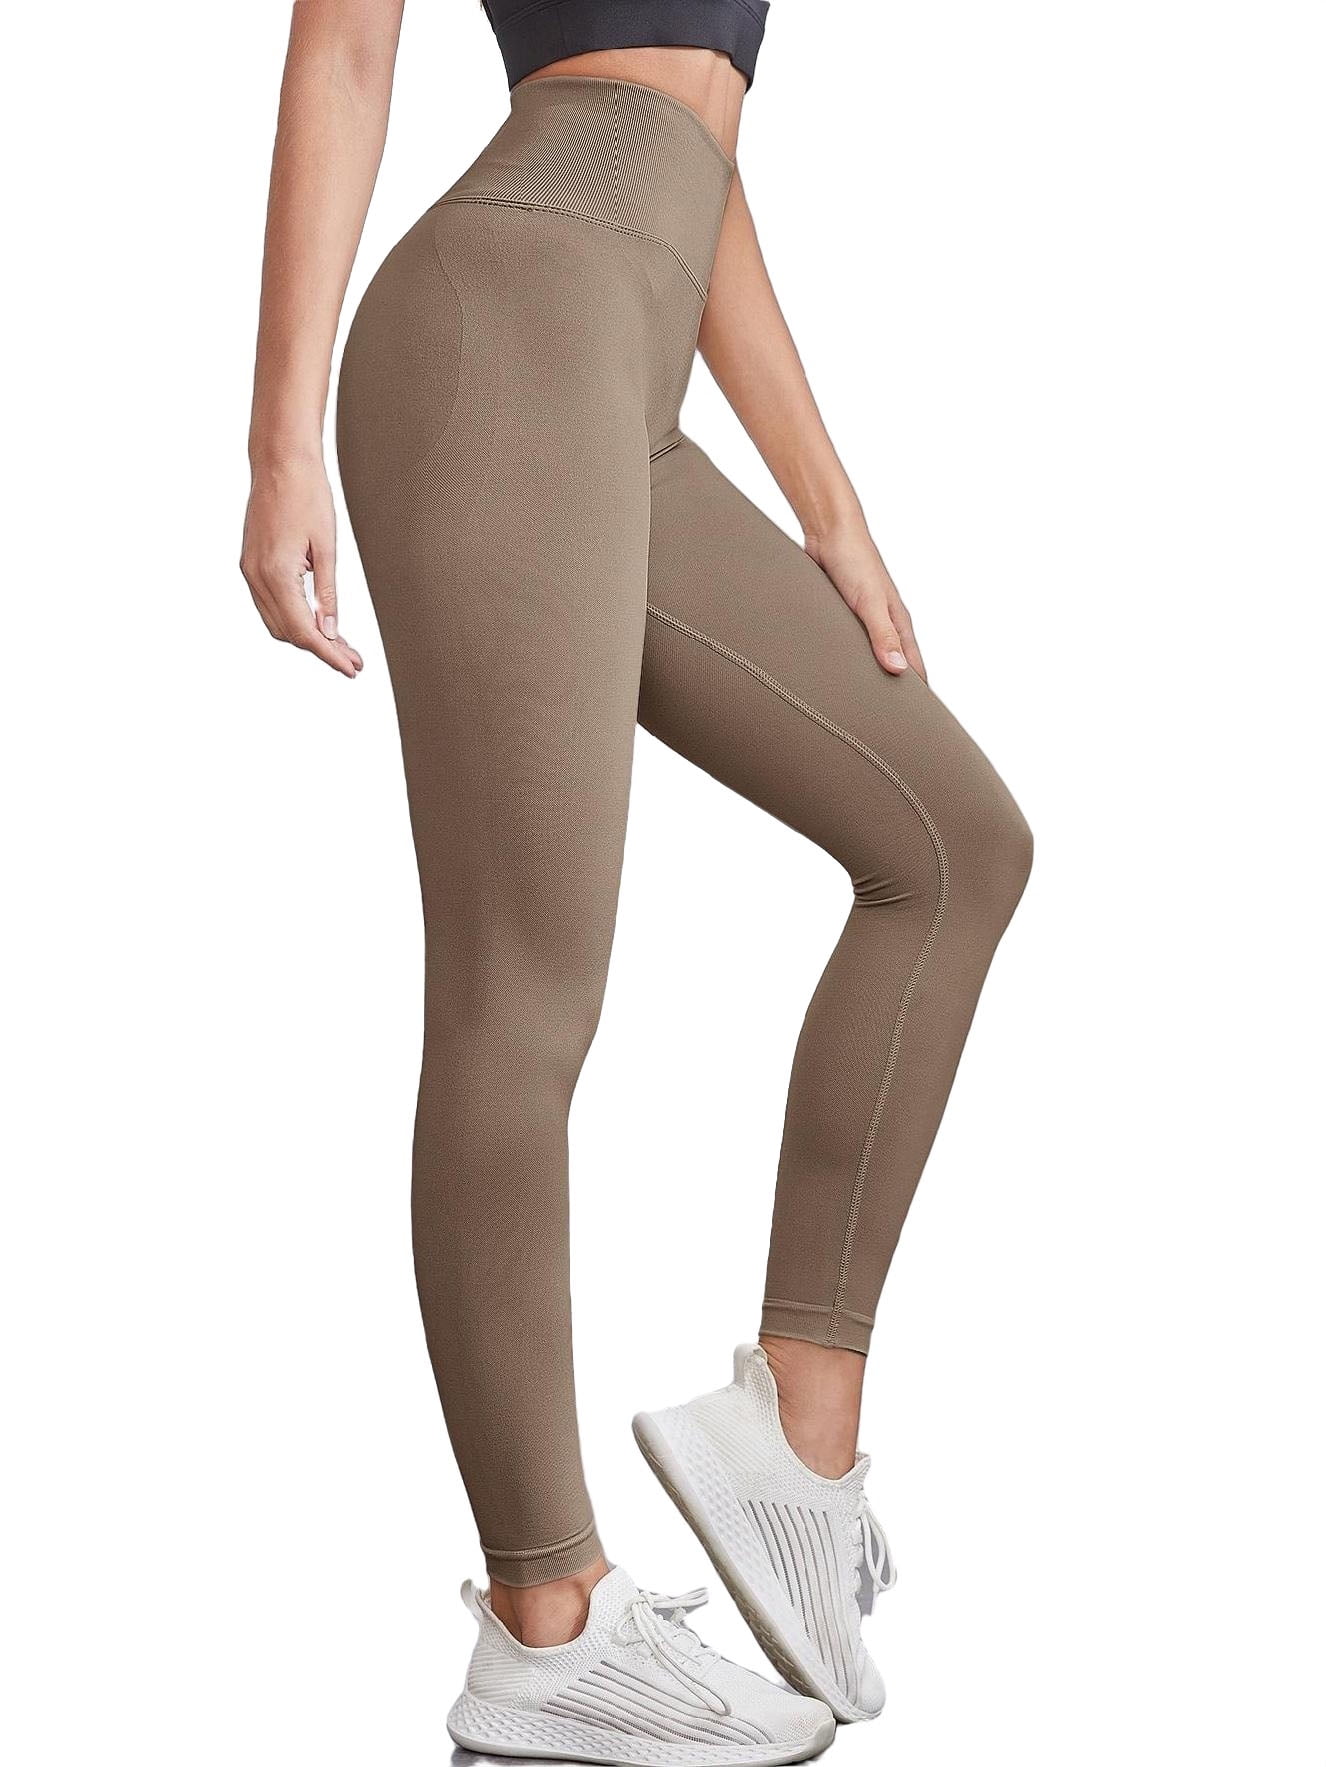 Women's High Waist Workout Yoga Pants Tight Leggings XS